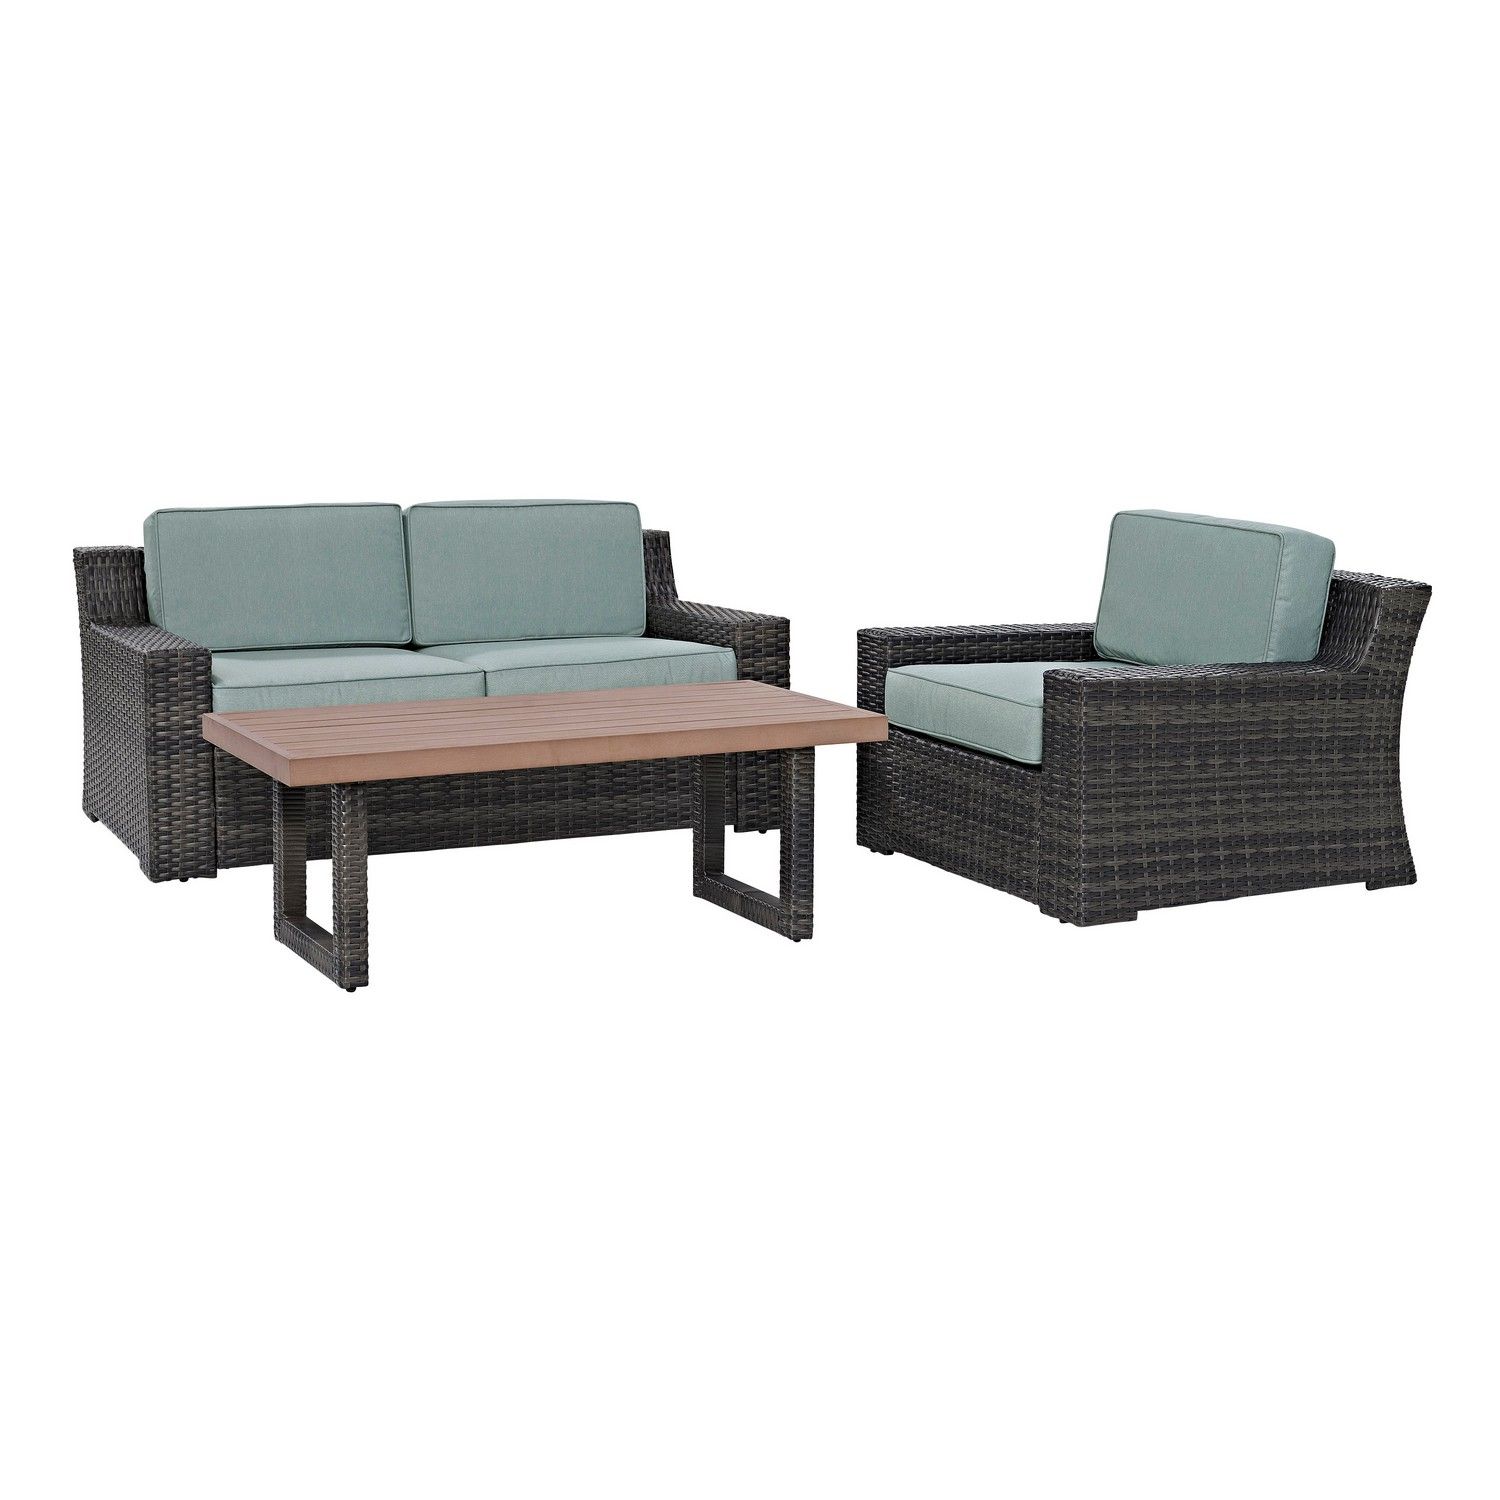 Crosley Beaufort 3-PC Outdoor Wicker Conversation Set - Loveseat, Chair, Coffee Table - Mist/Brown